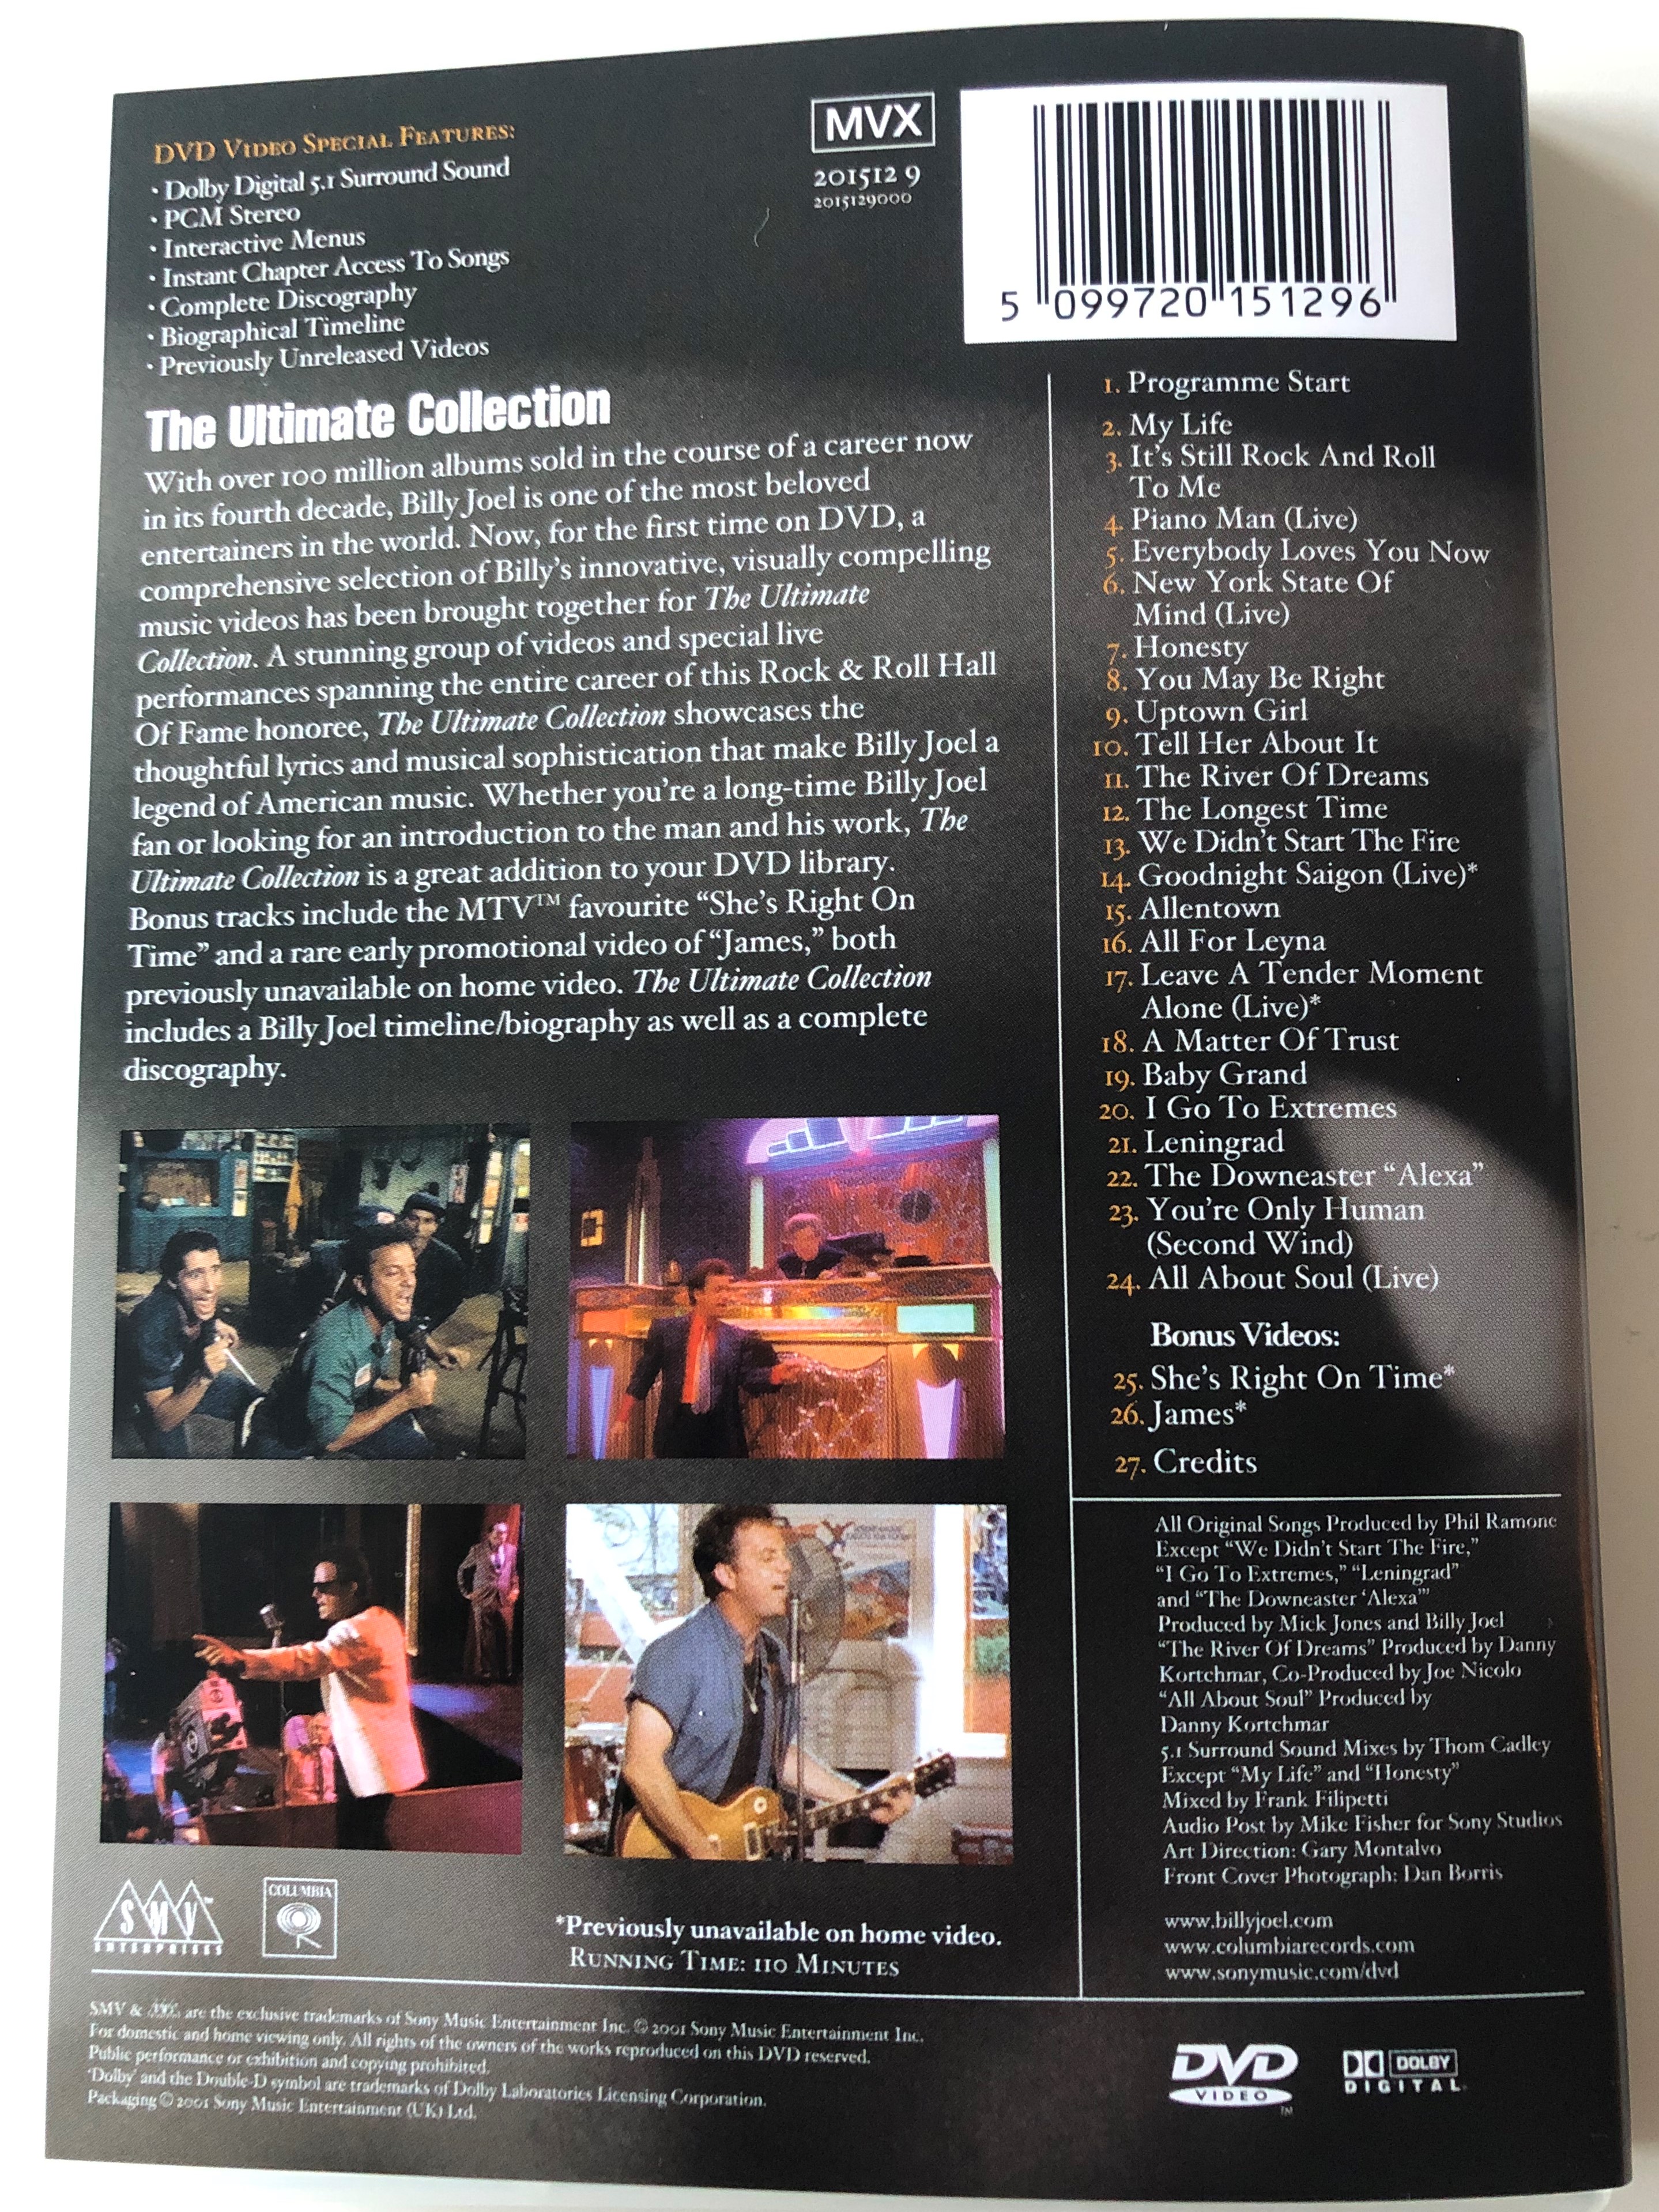 Billy Joel - The Ultimate Collection DVD 2001 / Piano man, Honesty, Uptown  Girl, A Matter of trust, Leningrad / With Bonus Videos / Columbia - SMV /  MVX 2015129 - bibleinmylanguage